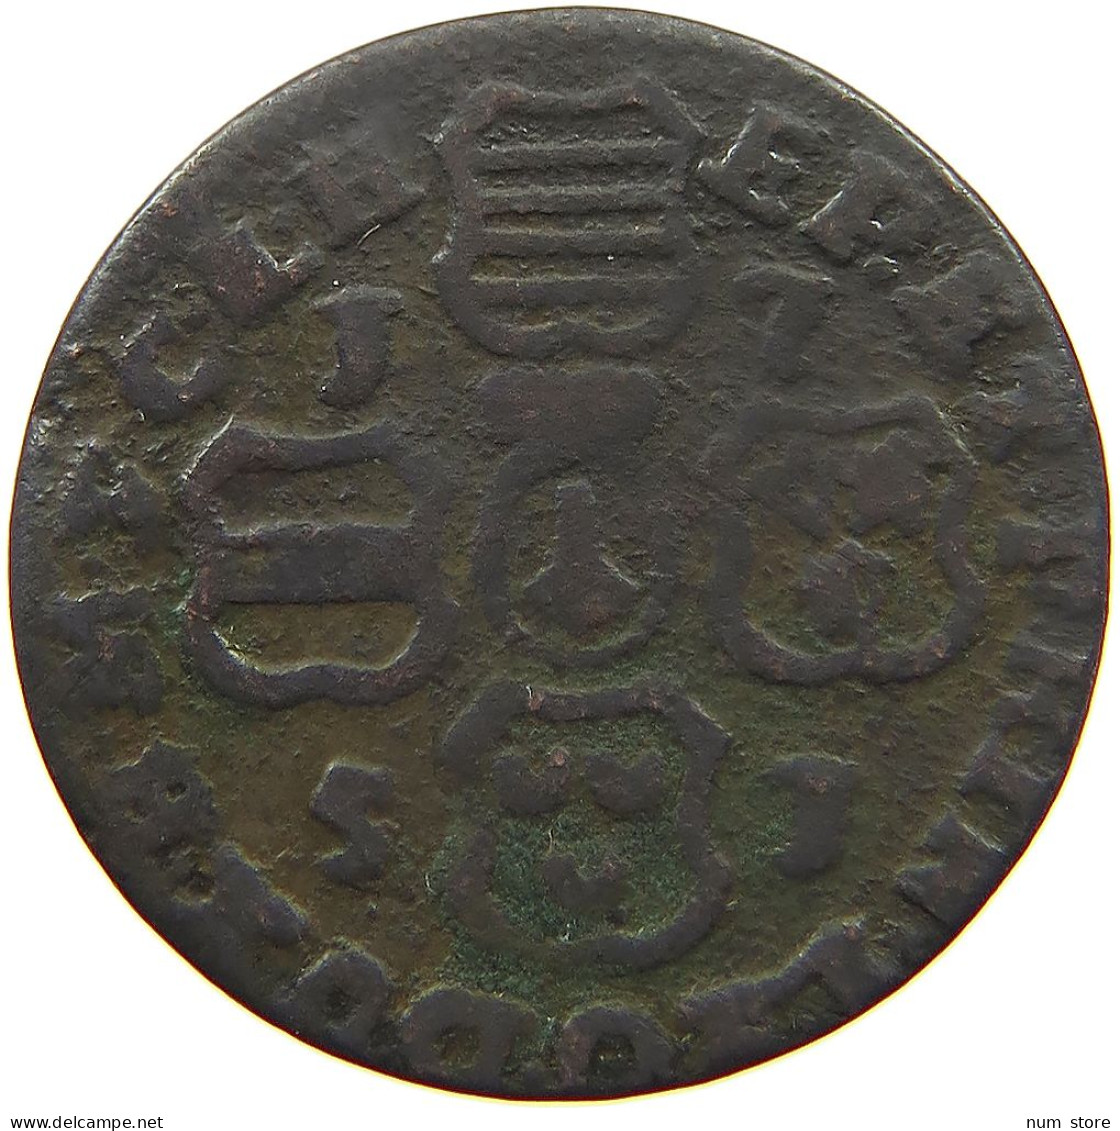 BELGIUM LIEGE LIARD 1751  #a016 0189 - 975-1795 Principauté De Liège 